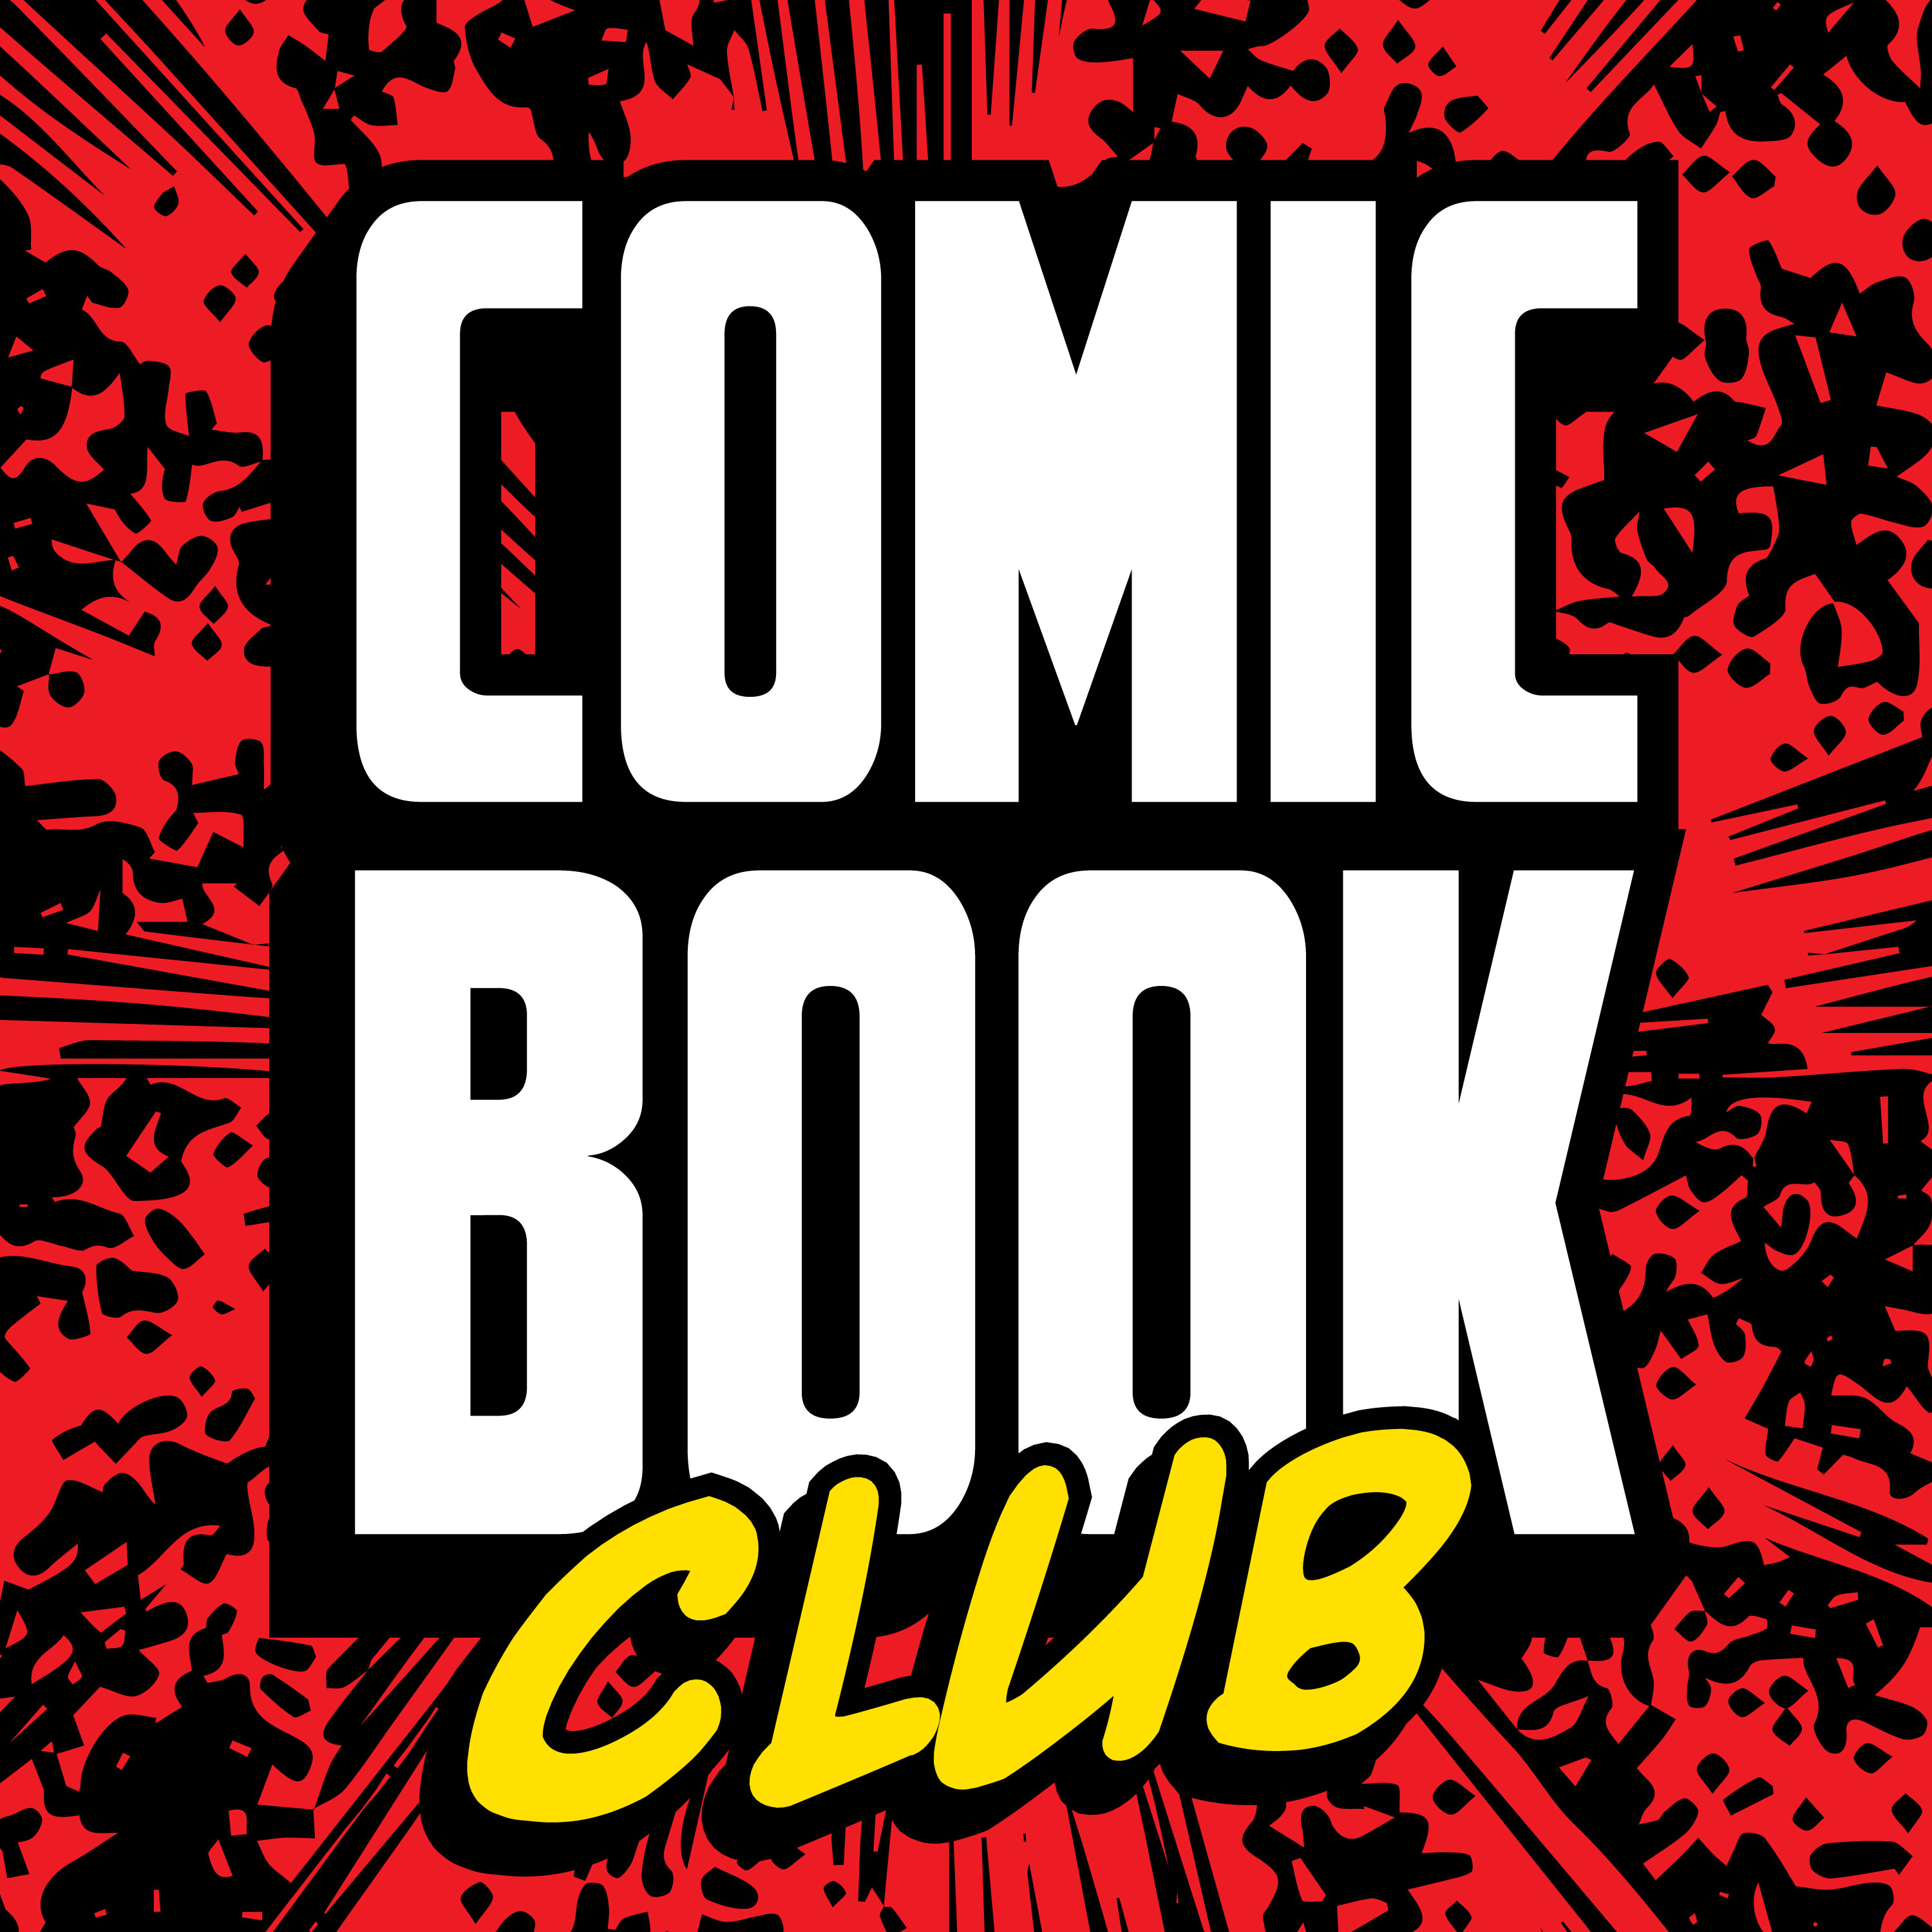 Comic Book Club: Plaid Klaus, Juan Espinosa And Justin Belmont